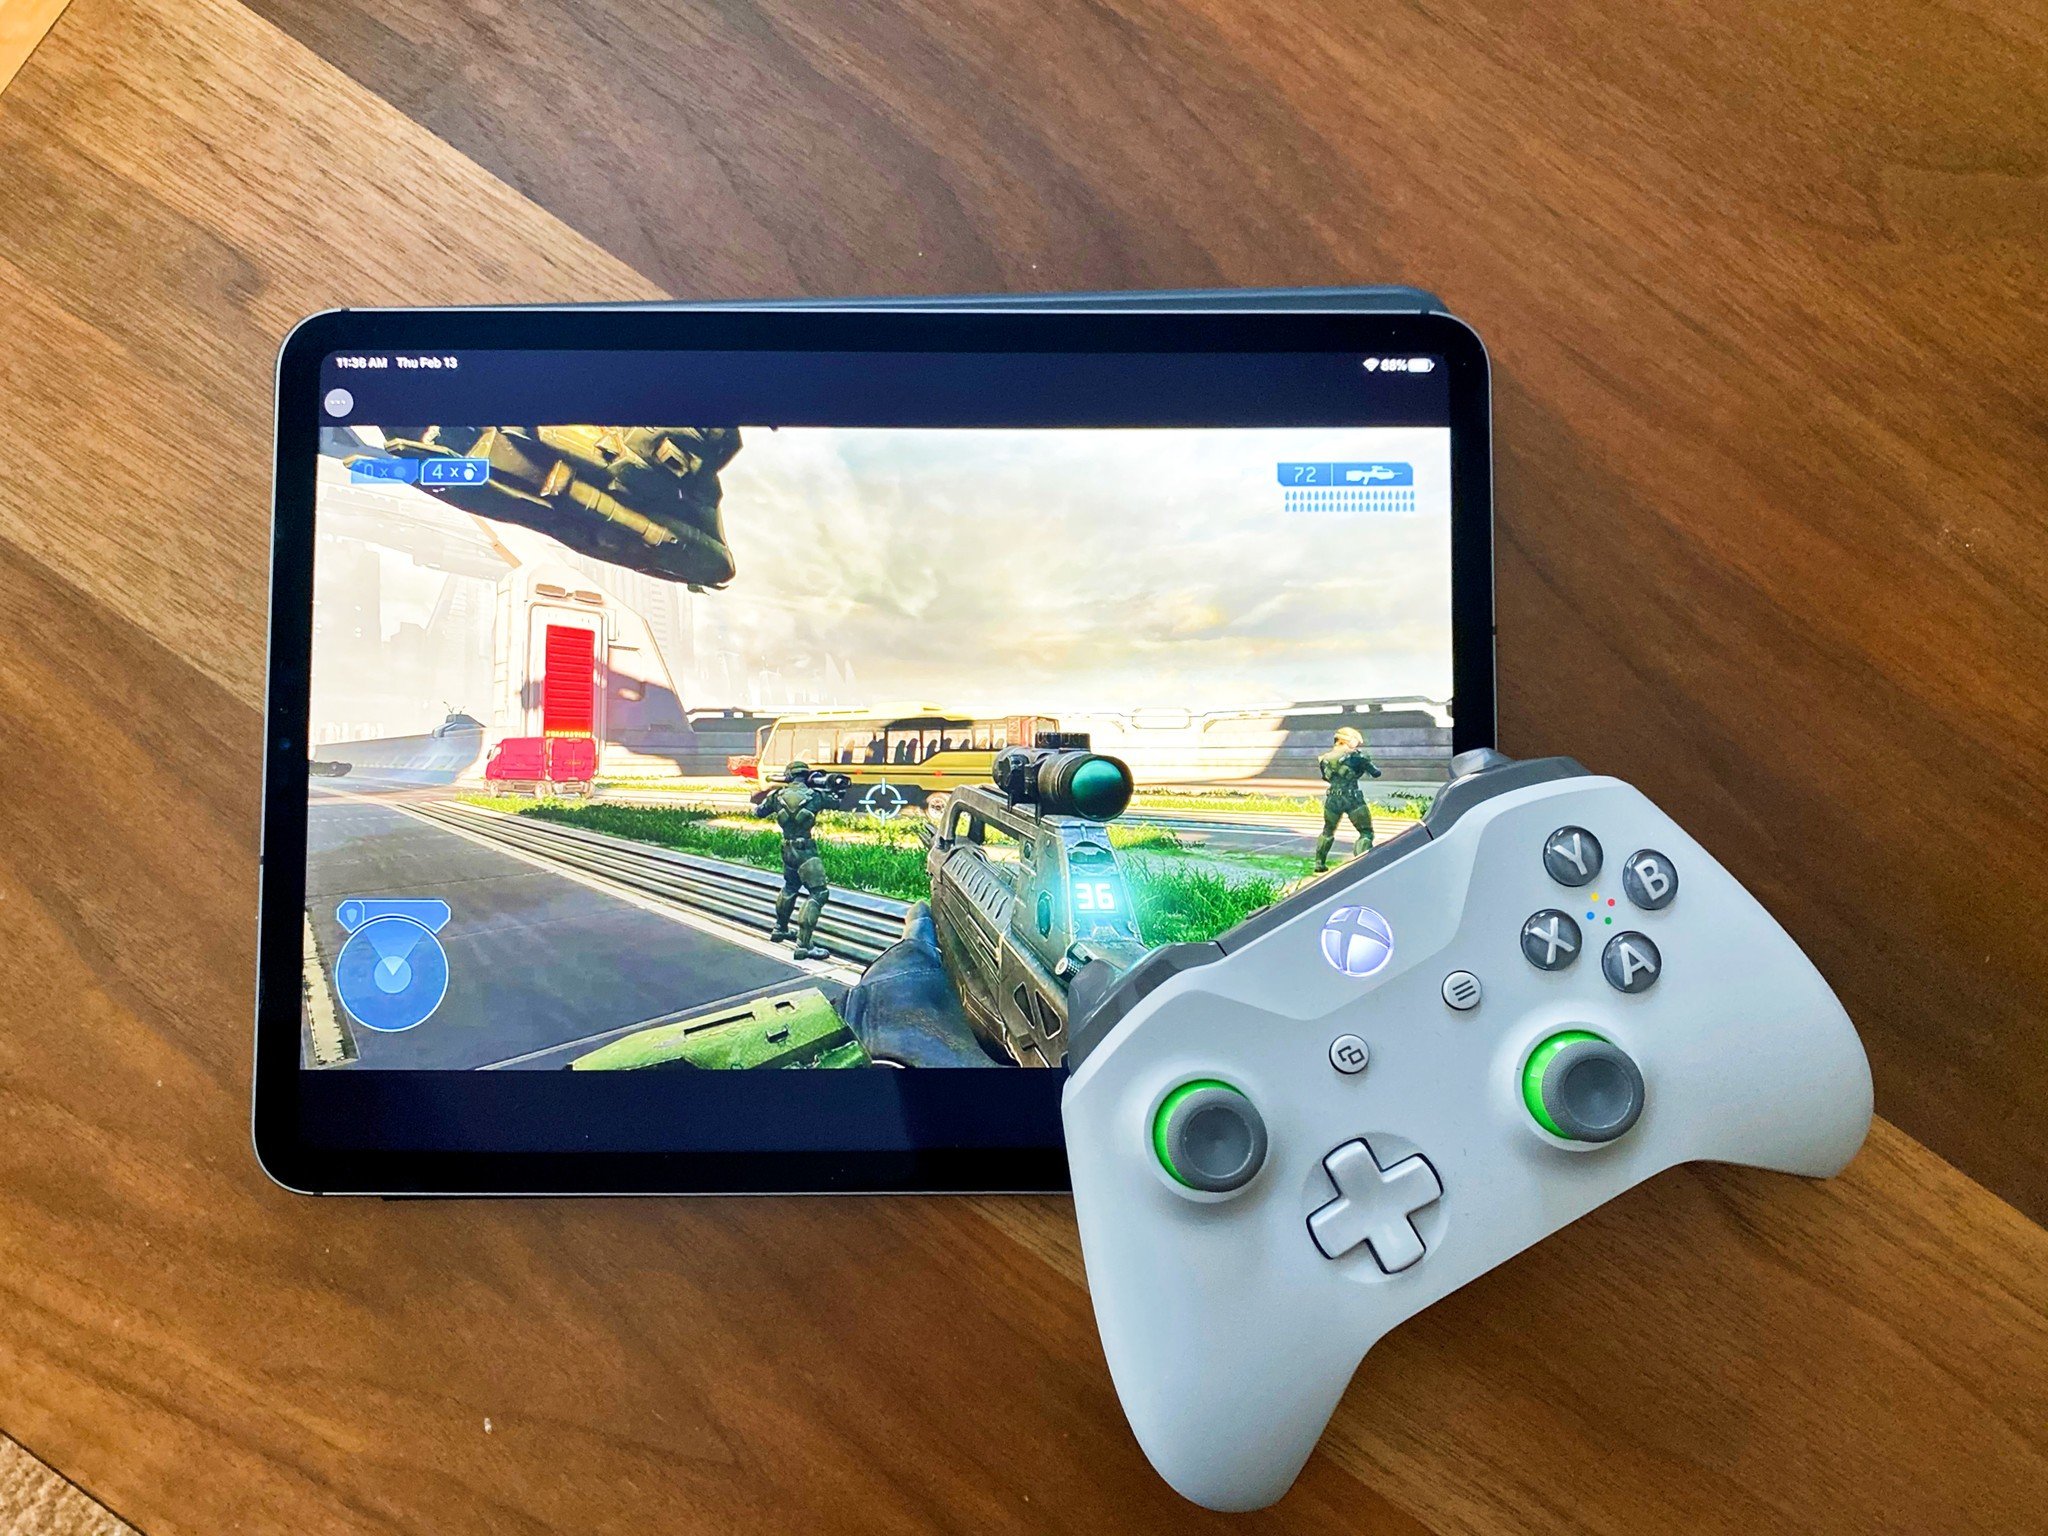 Microsoft makes rapid progress bringing Xbox gaming to iPhone and iPad